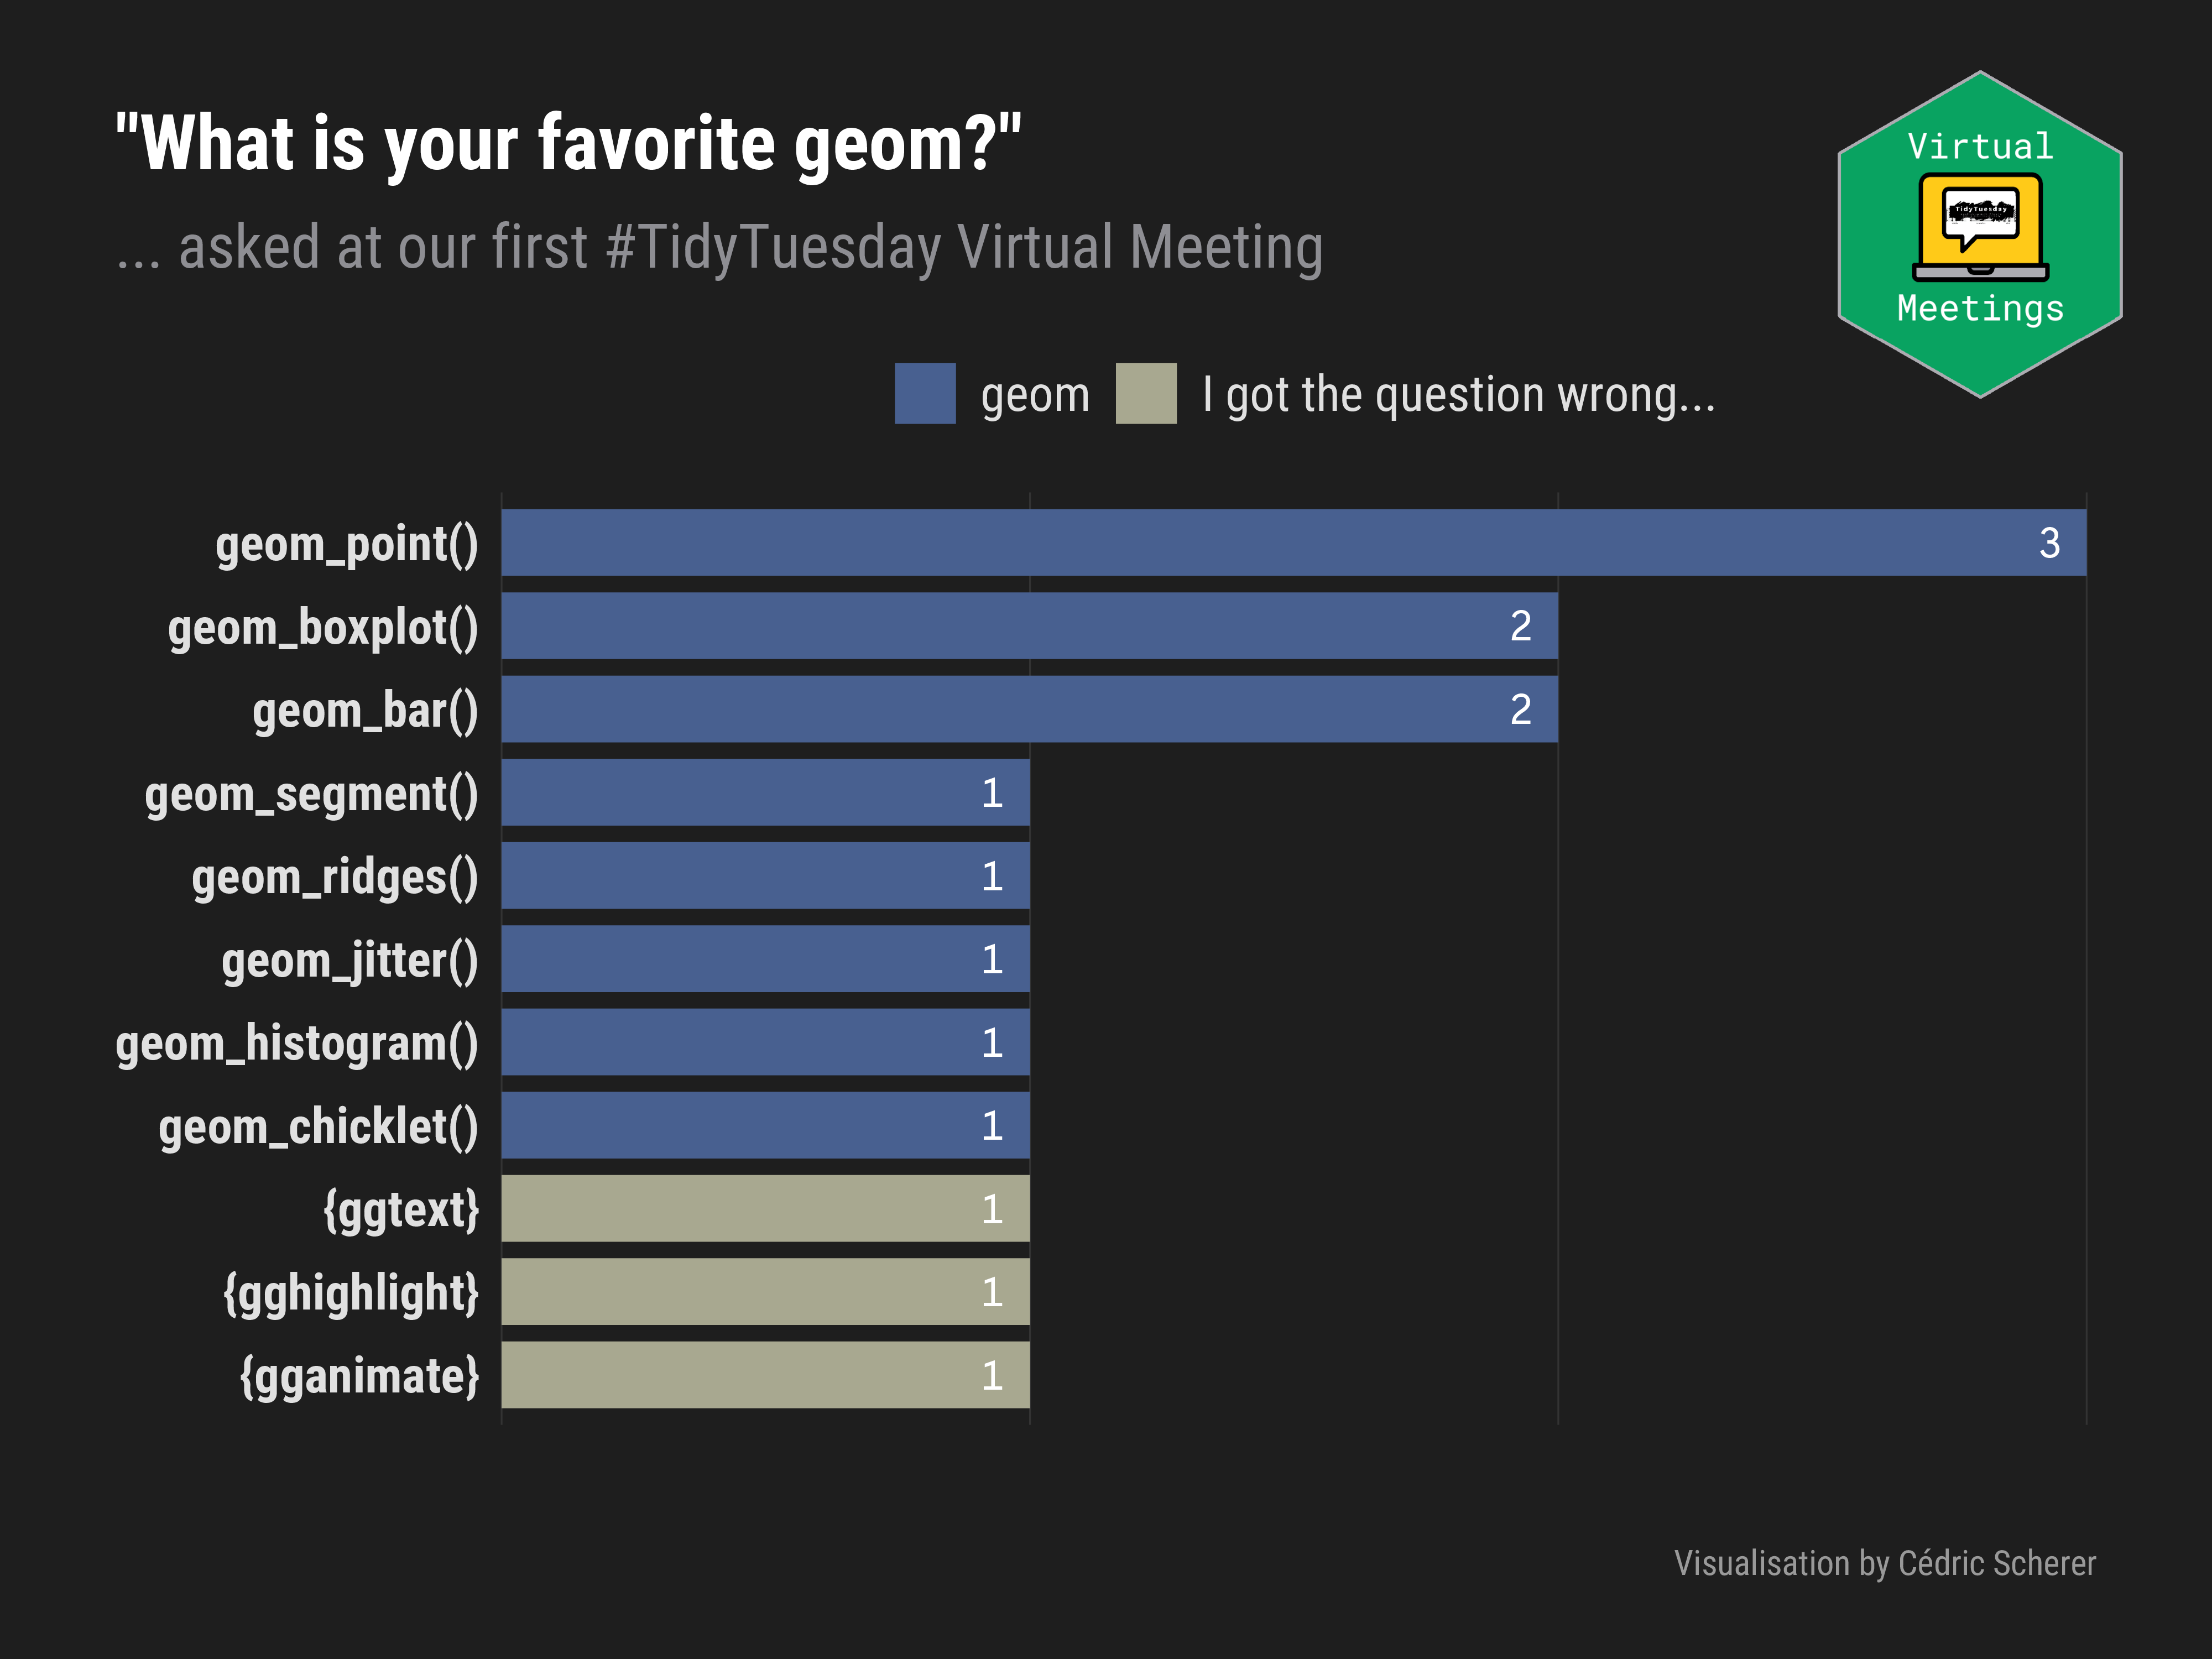 ./surveys/001_favorite_geoms.png